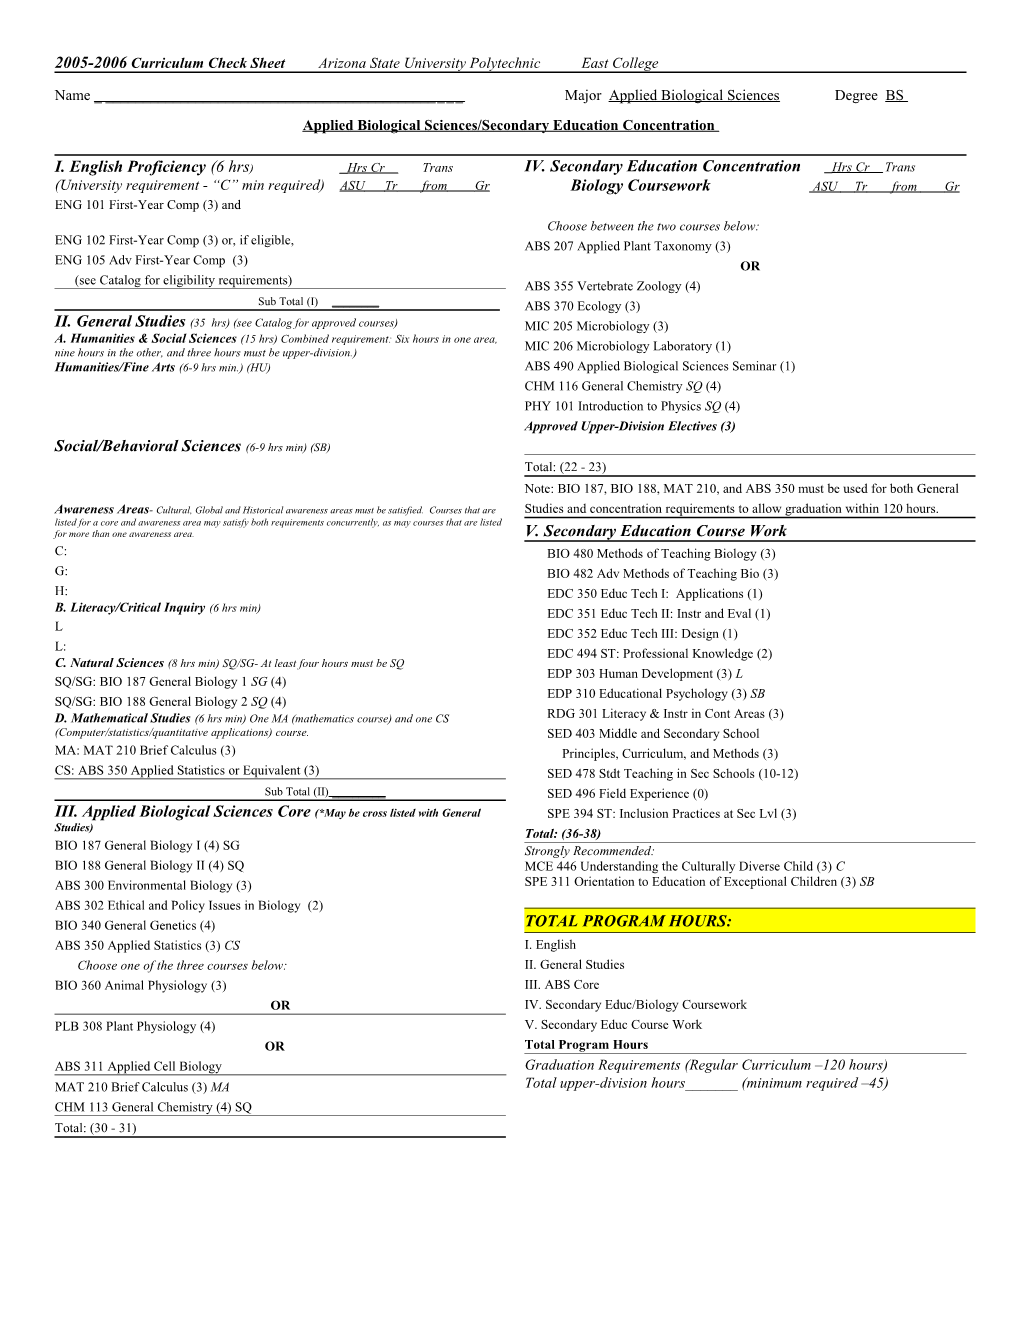 1996-1998 Curriculum Check Sheet Arizona State University/East (Williams Field) School s1